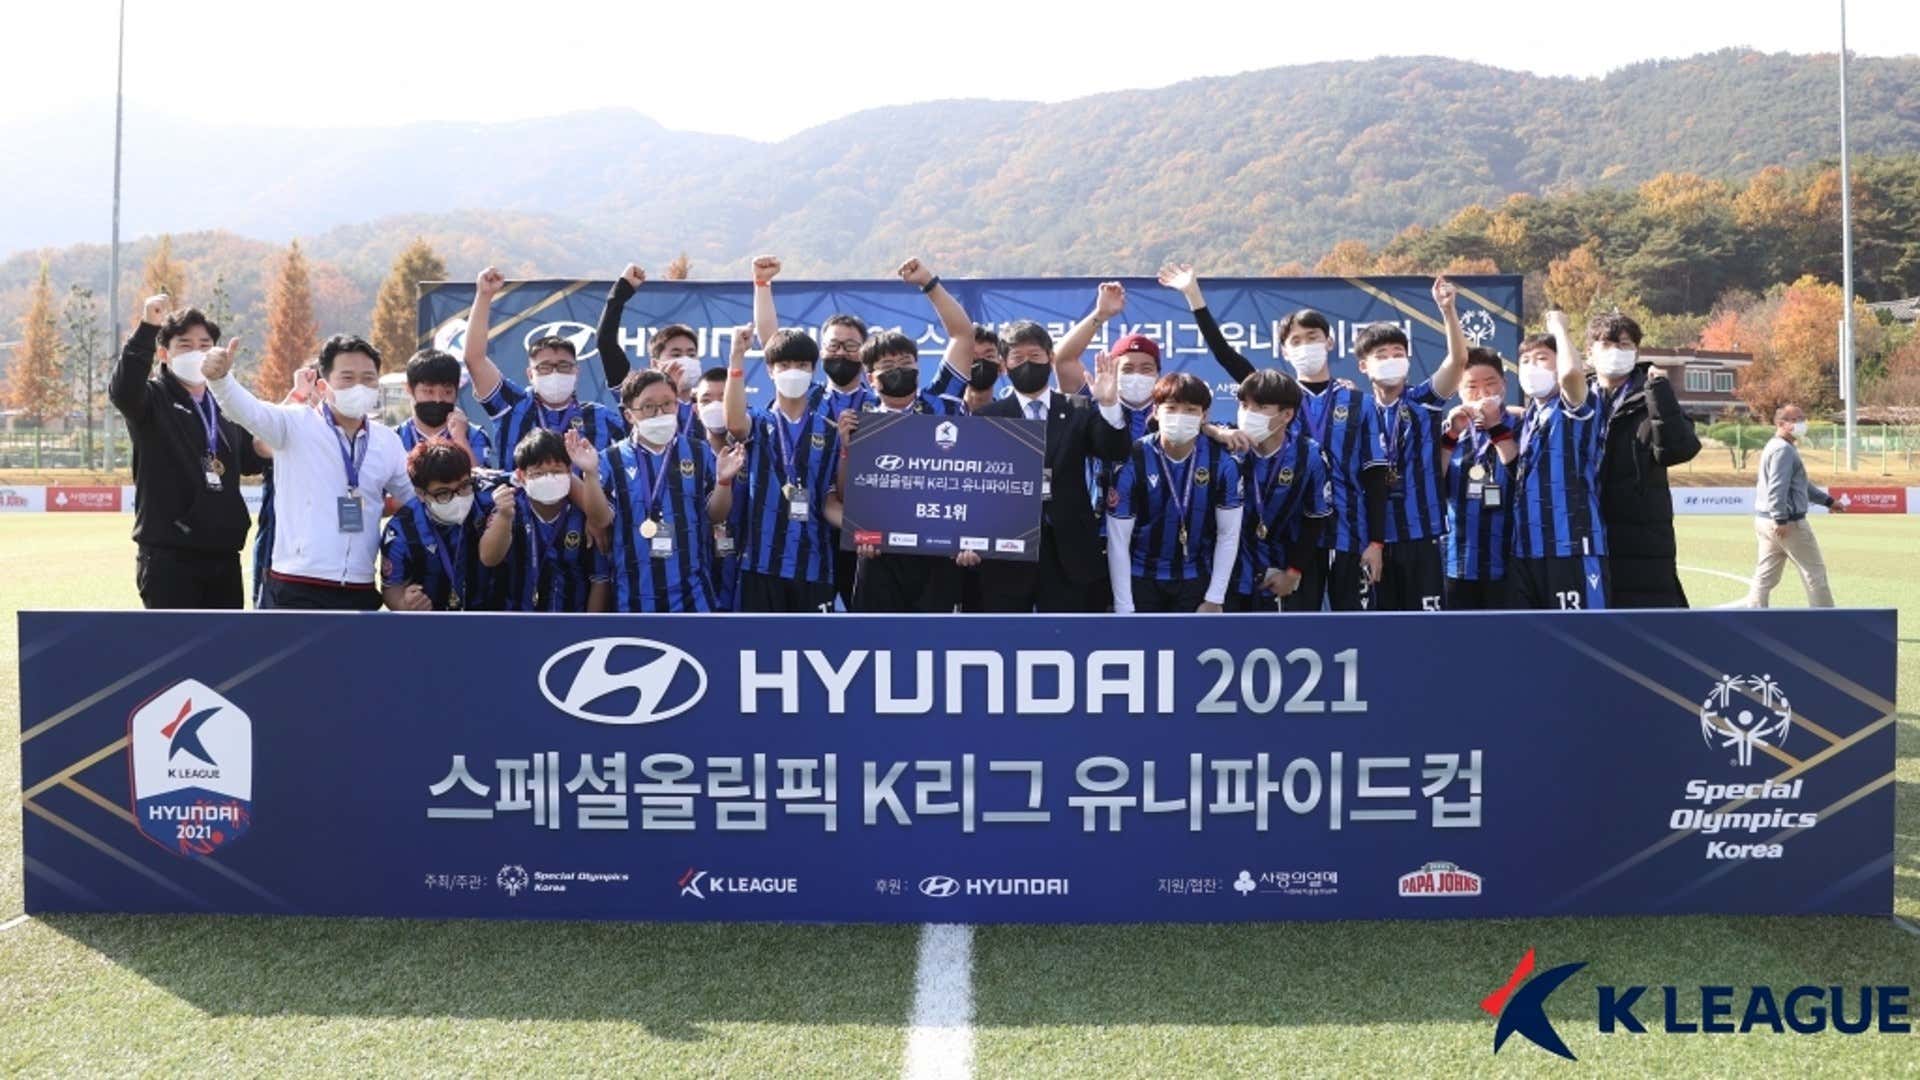 K League Unified Cup 2021